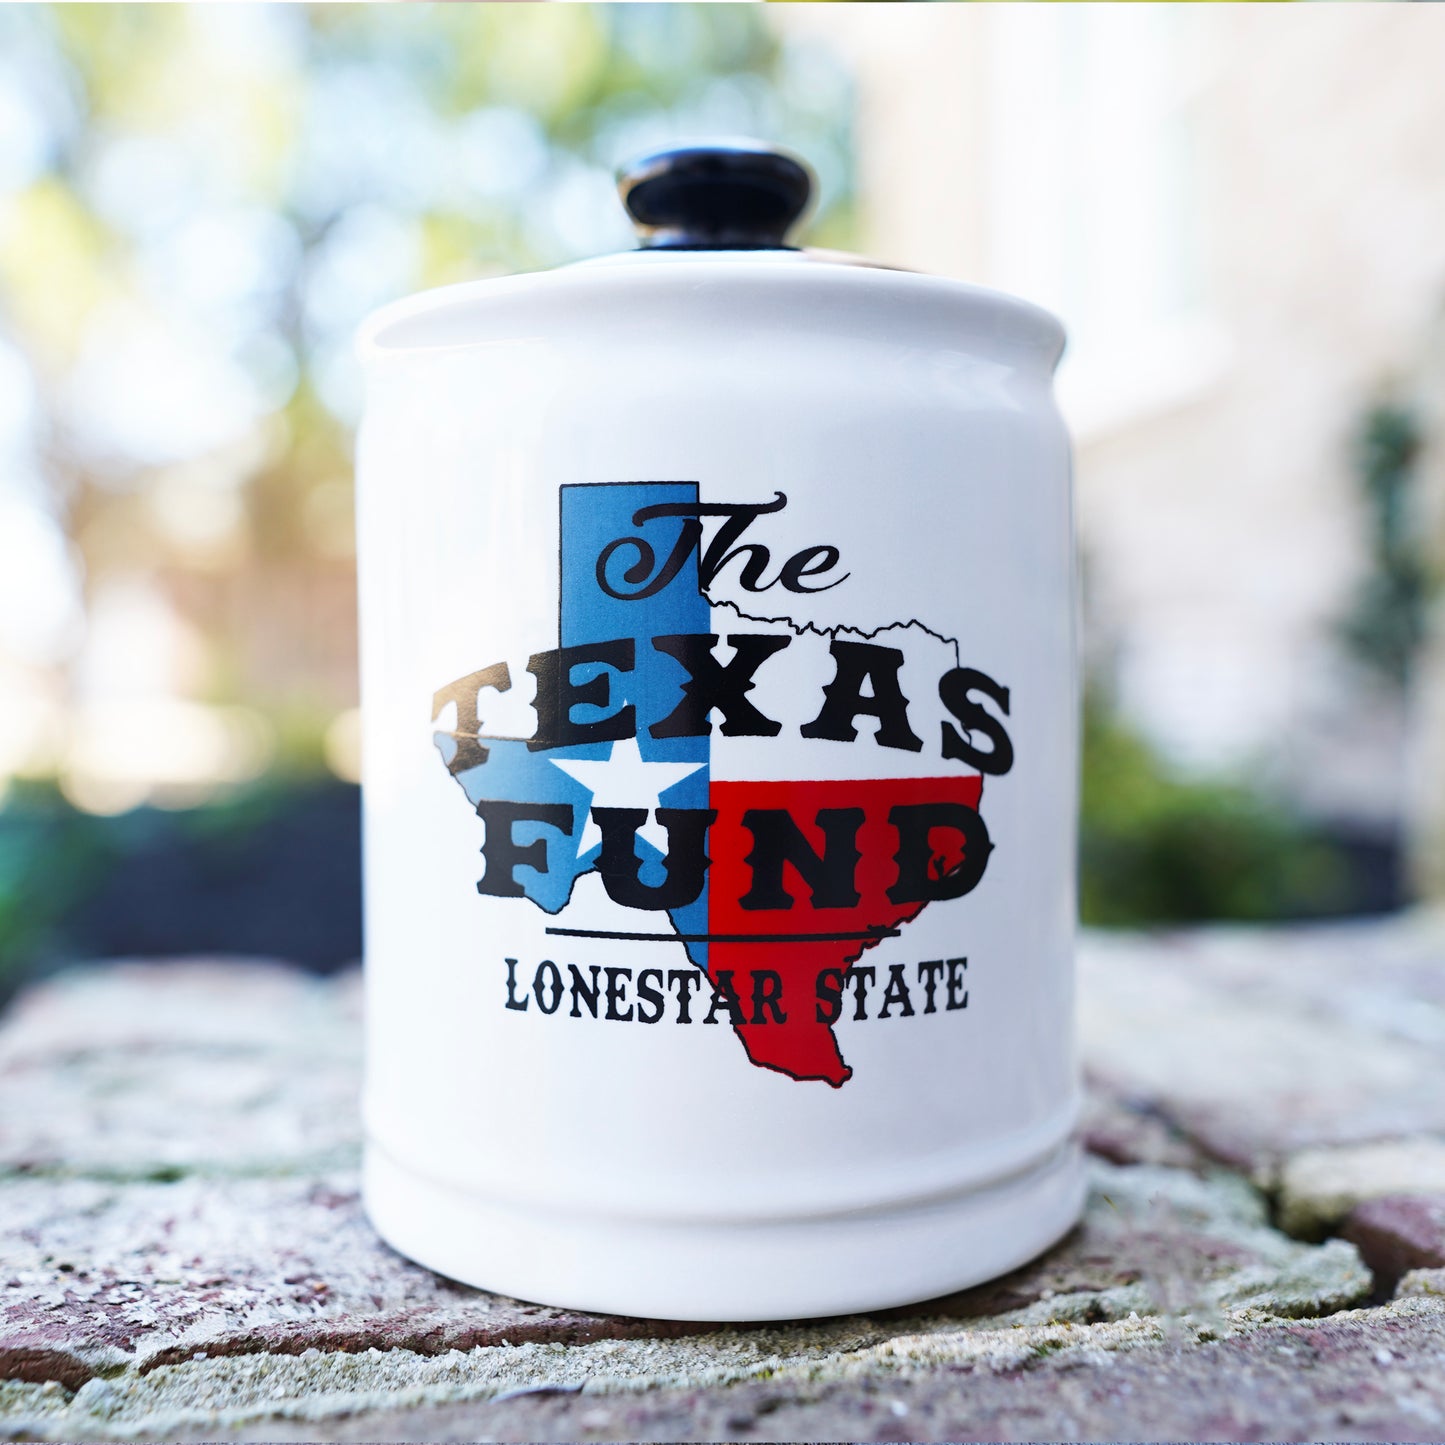 Cottage Creek Texas Fund Piggy Bank, Ceramic, Multicolored, 6" Texas Flag Candy Jar, Texas Vacation Savings Bank